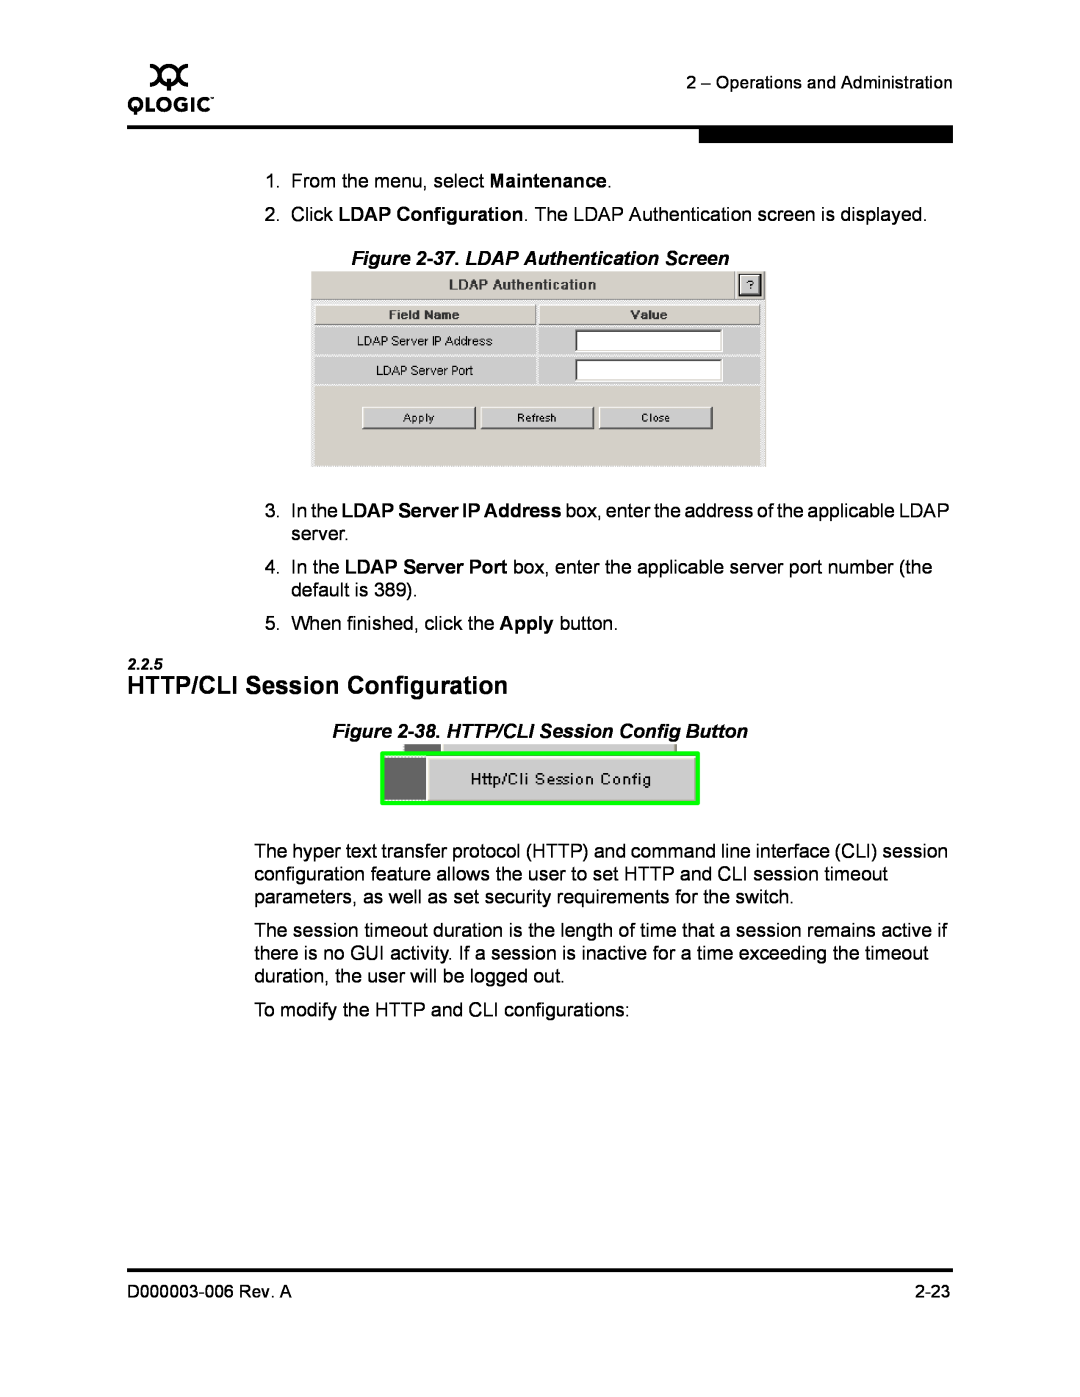 Q-Logic 9000 manual HTTP/CLI Session Configuration, 37. LDAP Authentication Screen, 38. HTTP/CLI Session Config Button 